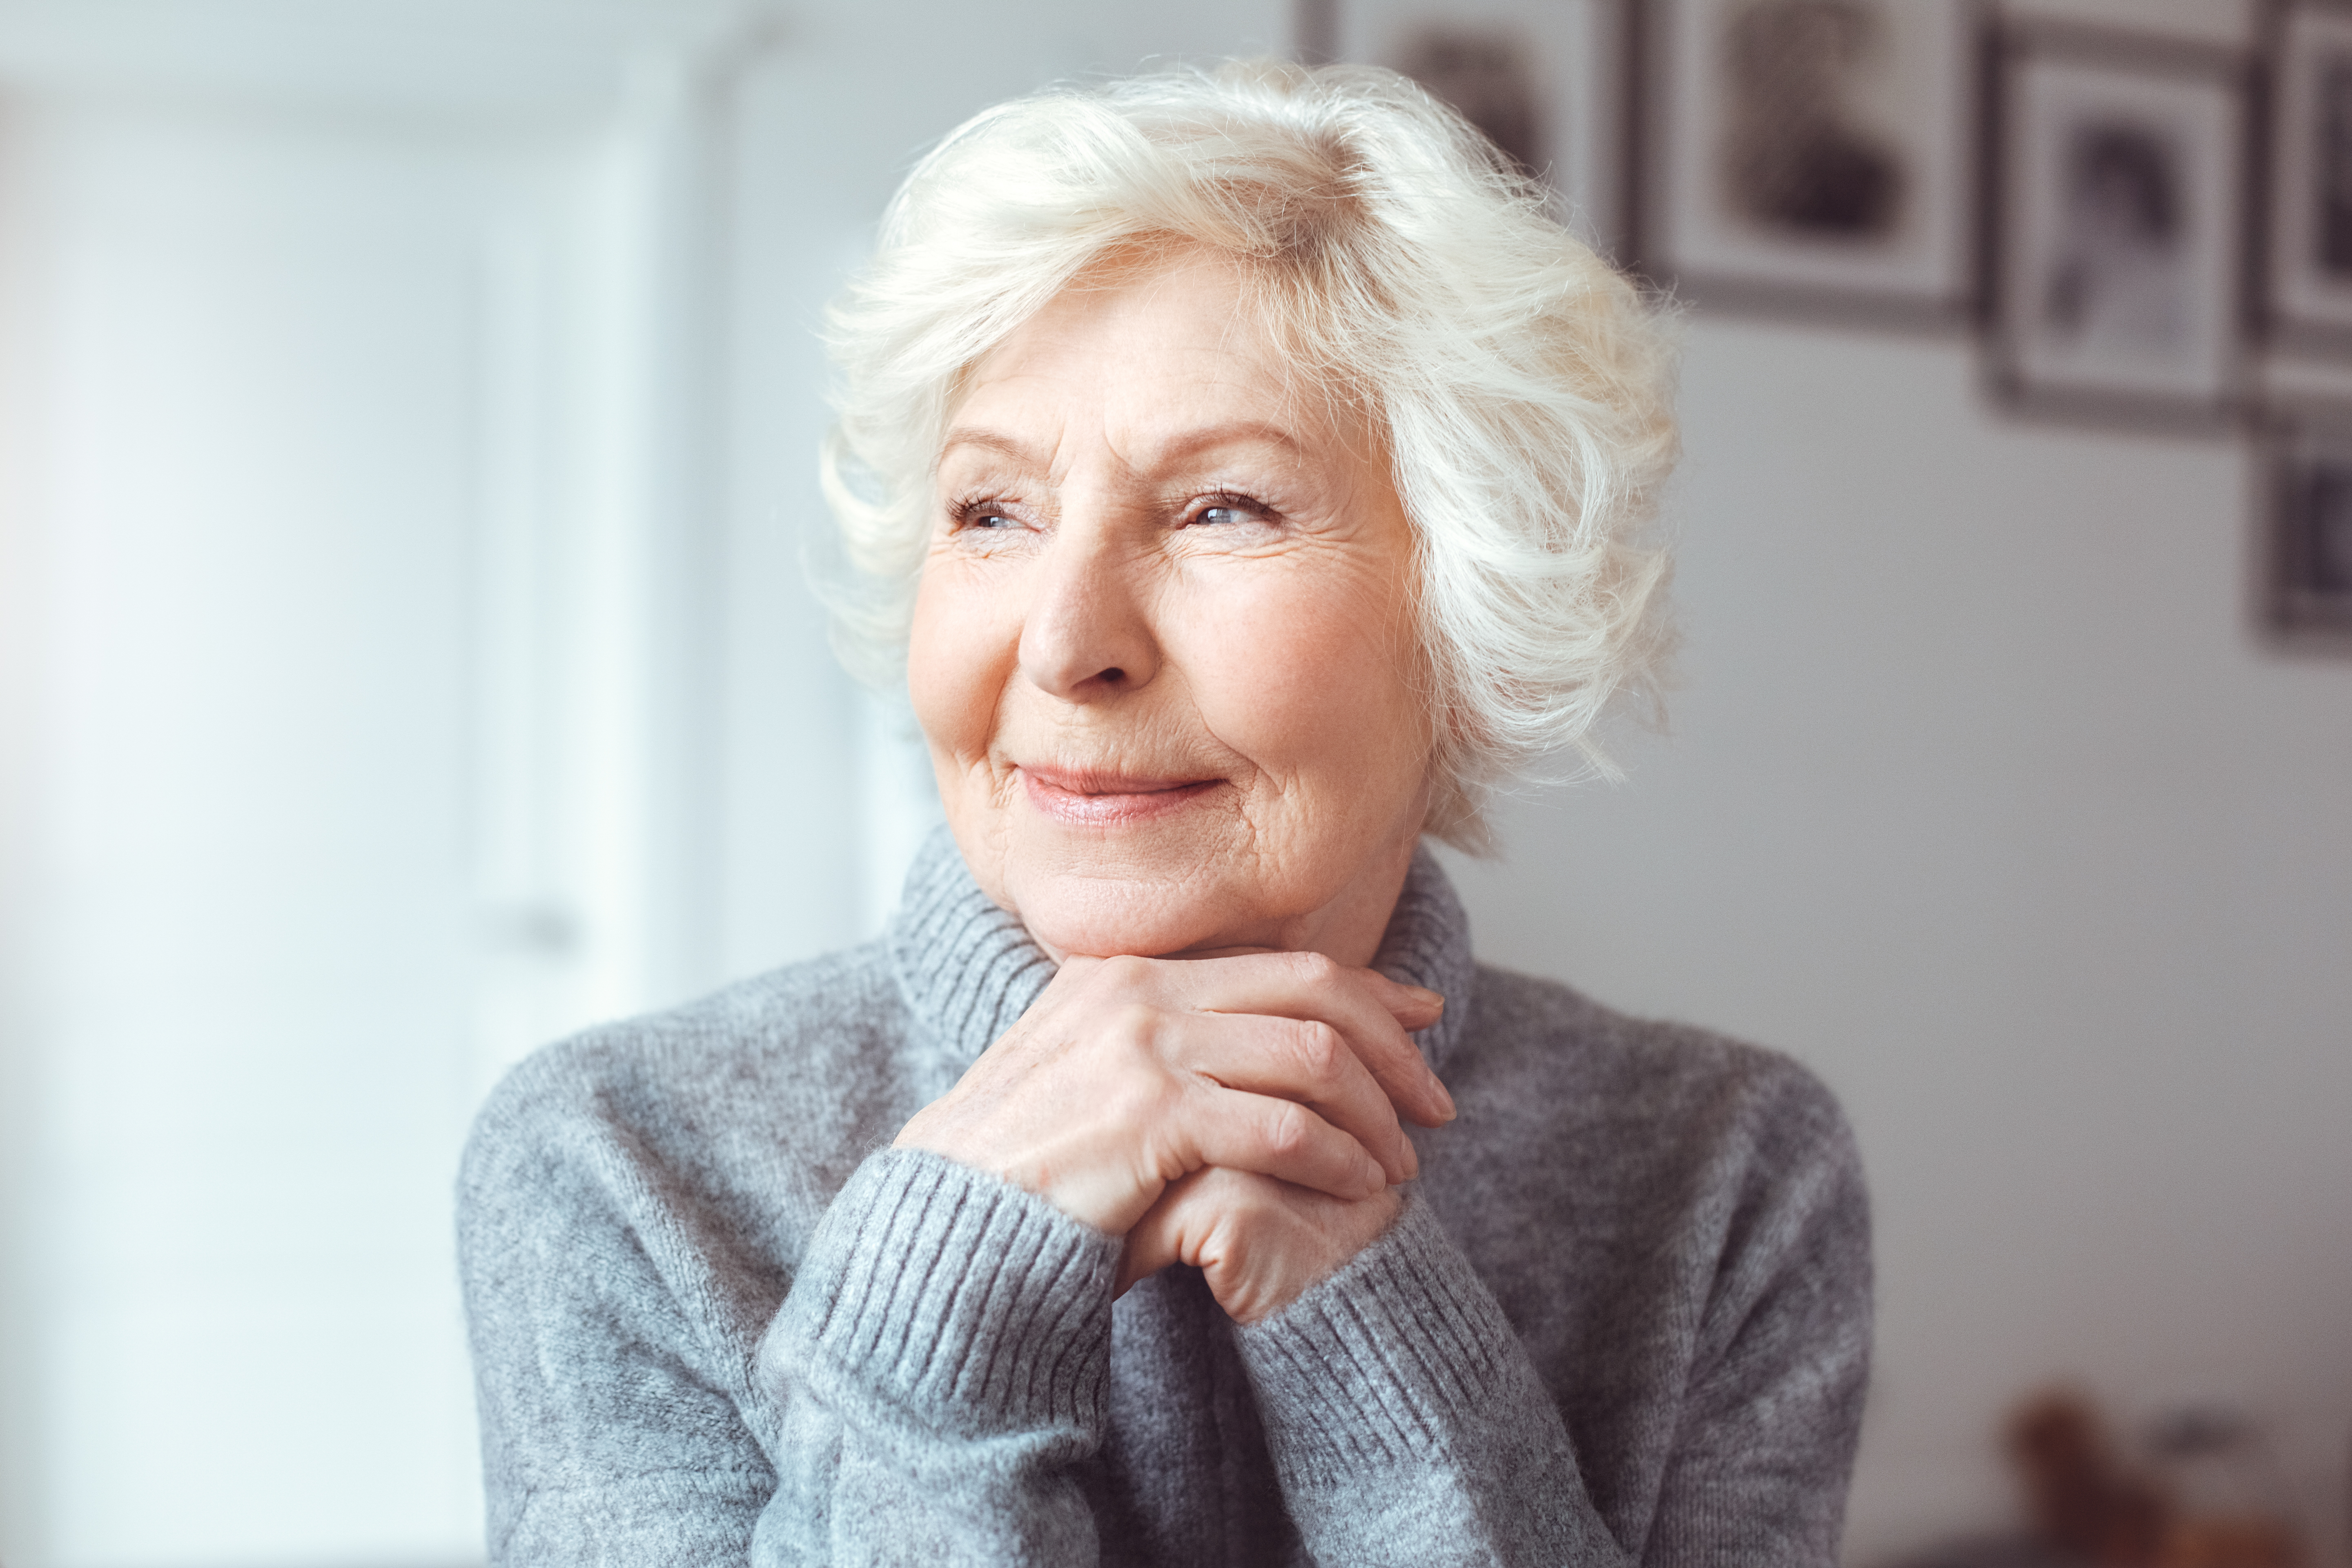 An elderly woman | Source: Shutterstock